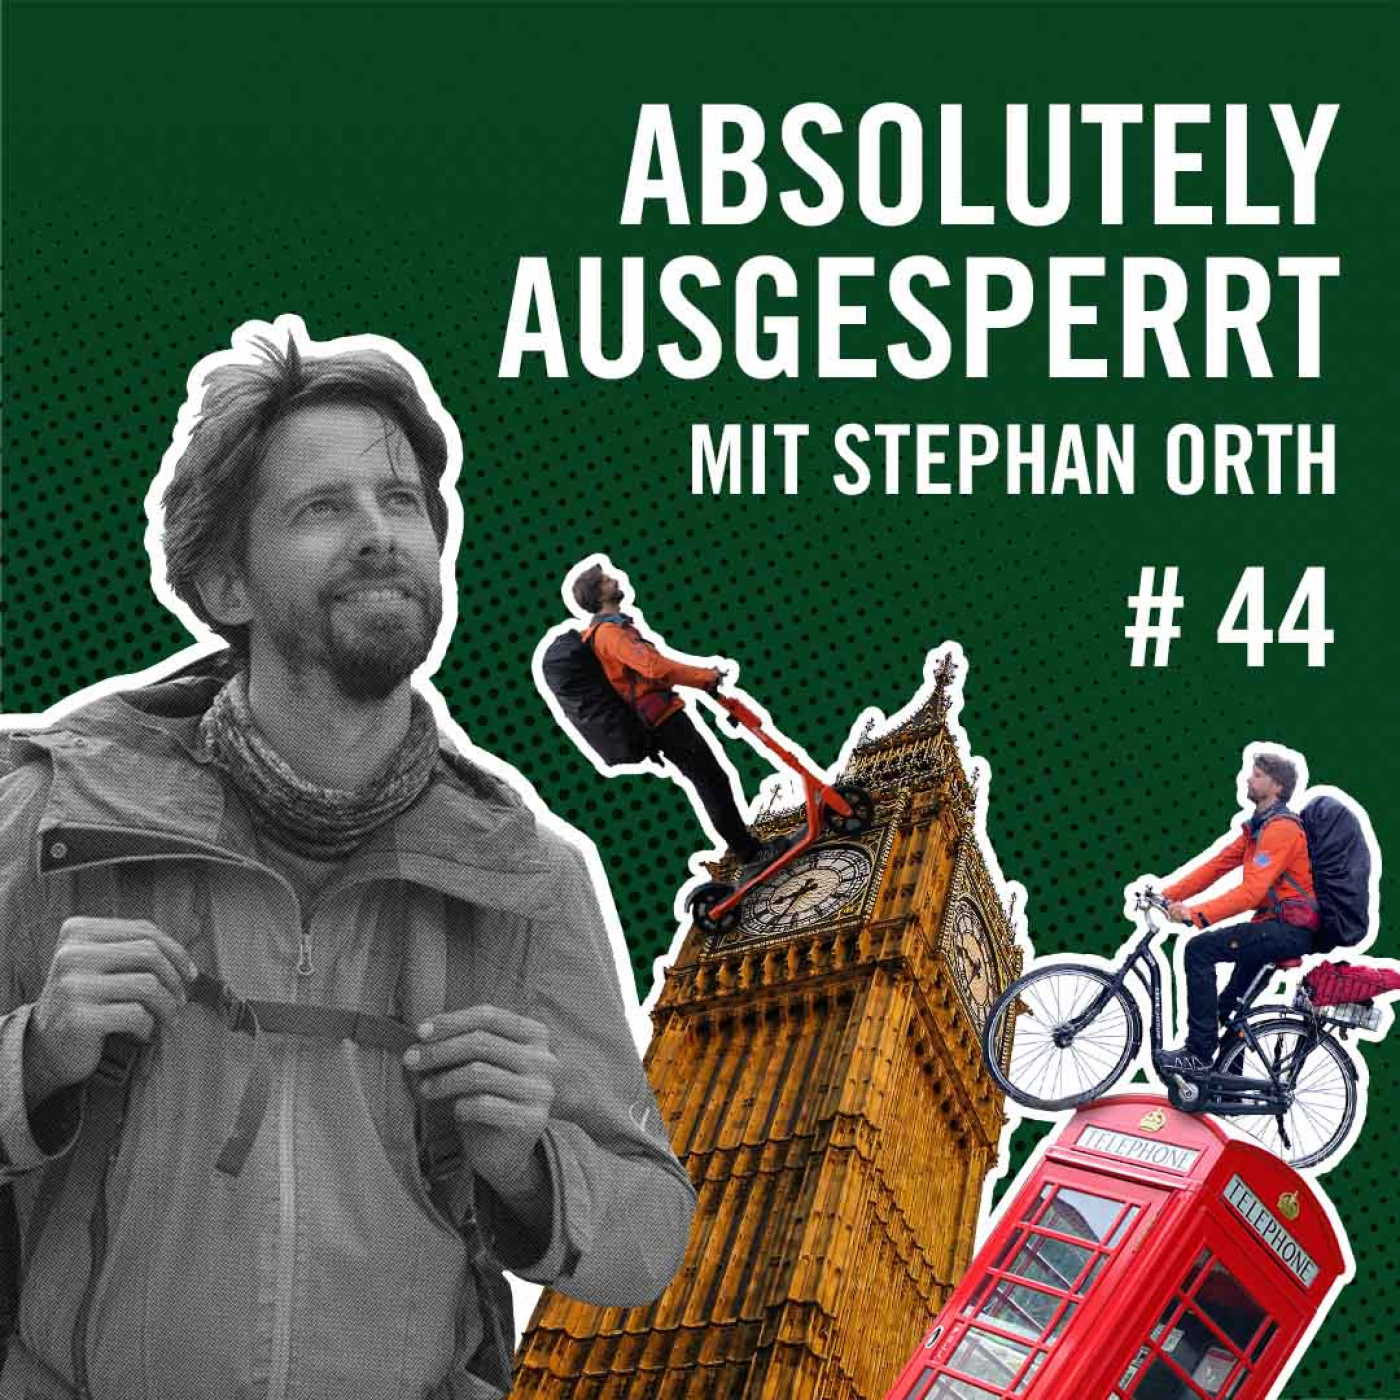 Absolutely ausgesperrt mit Stephan Orth #44